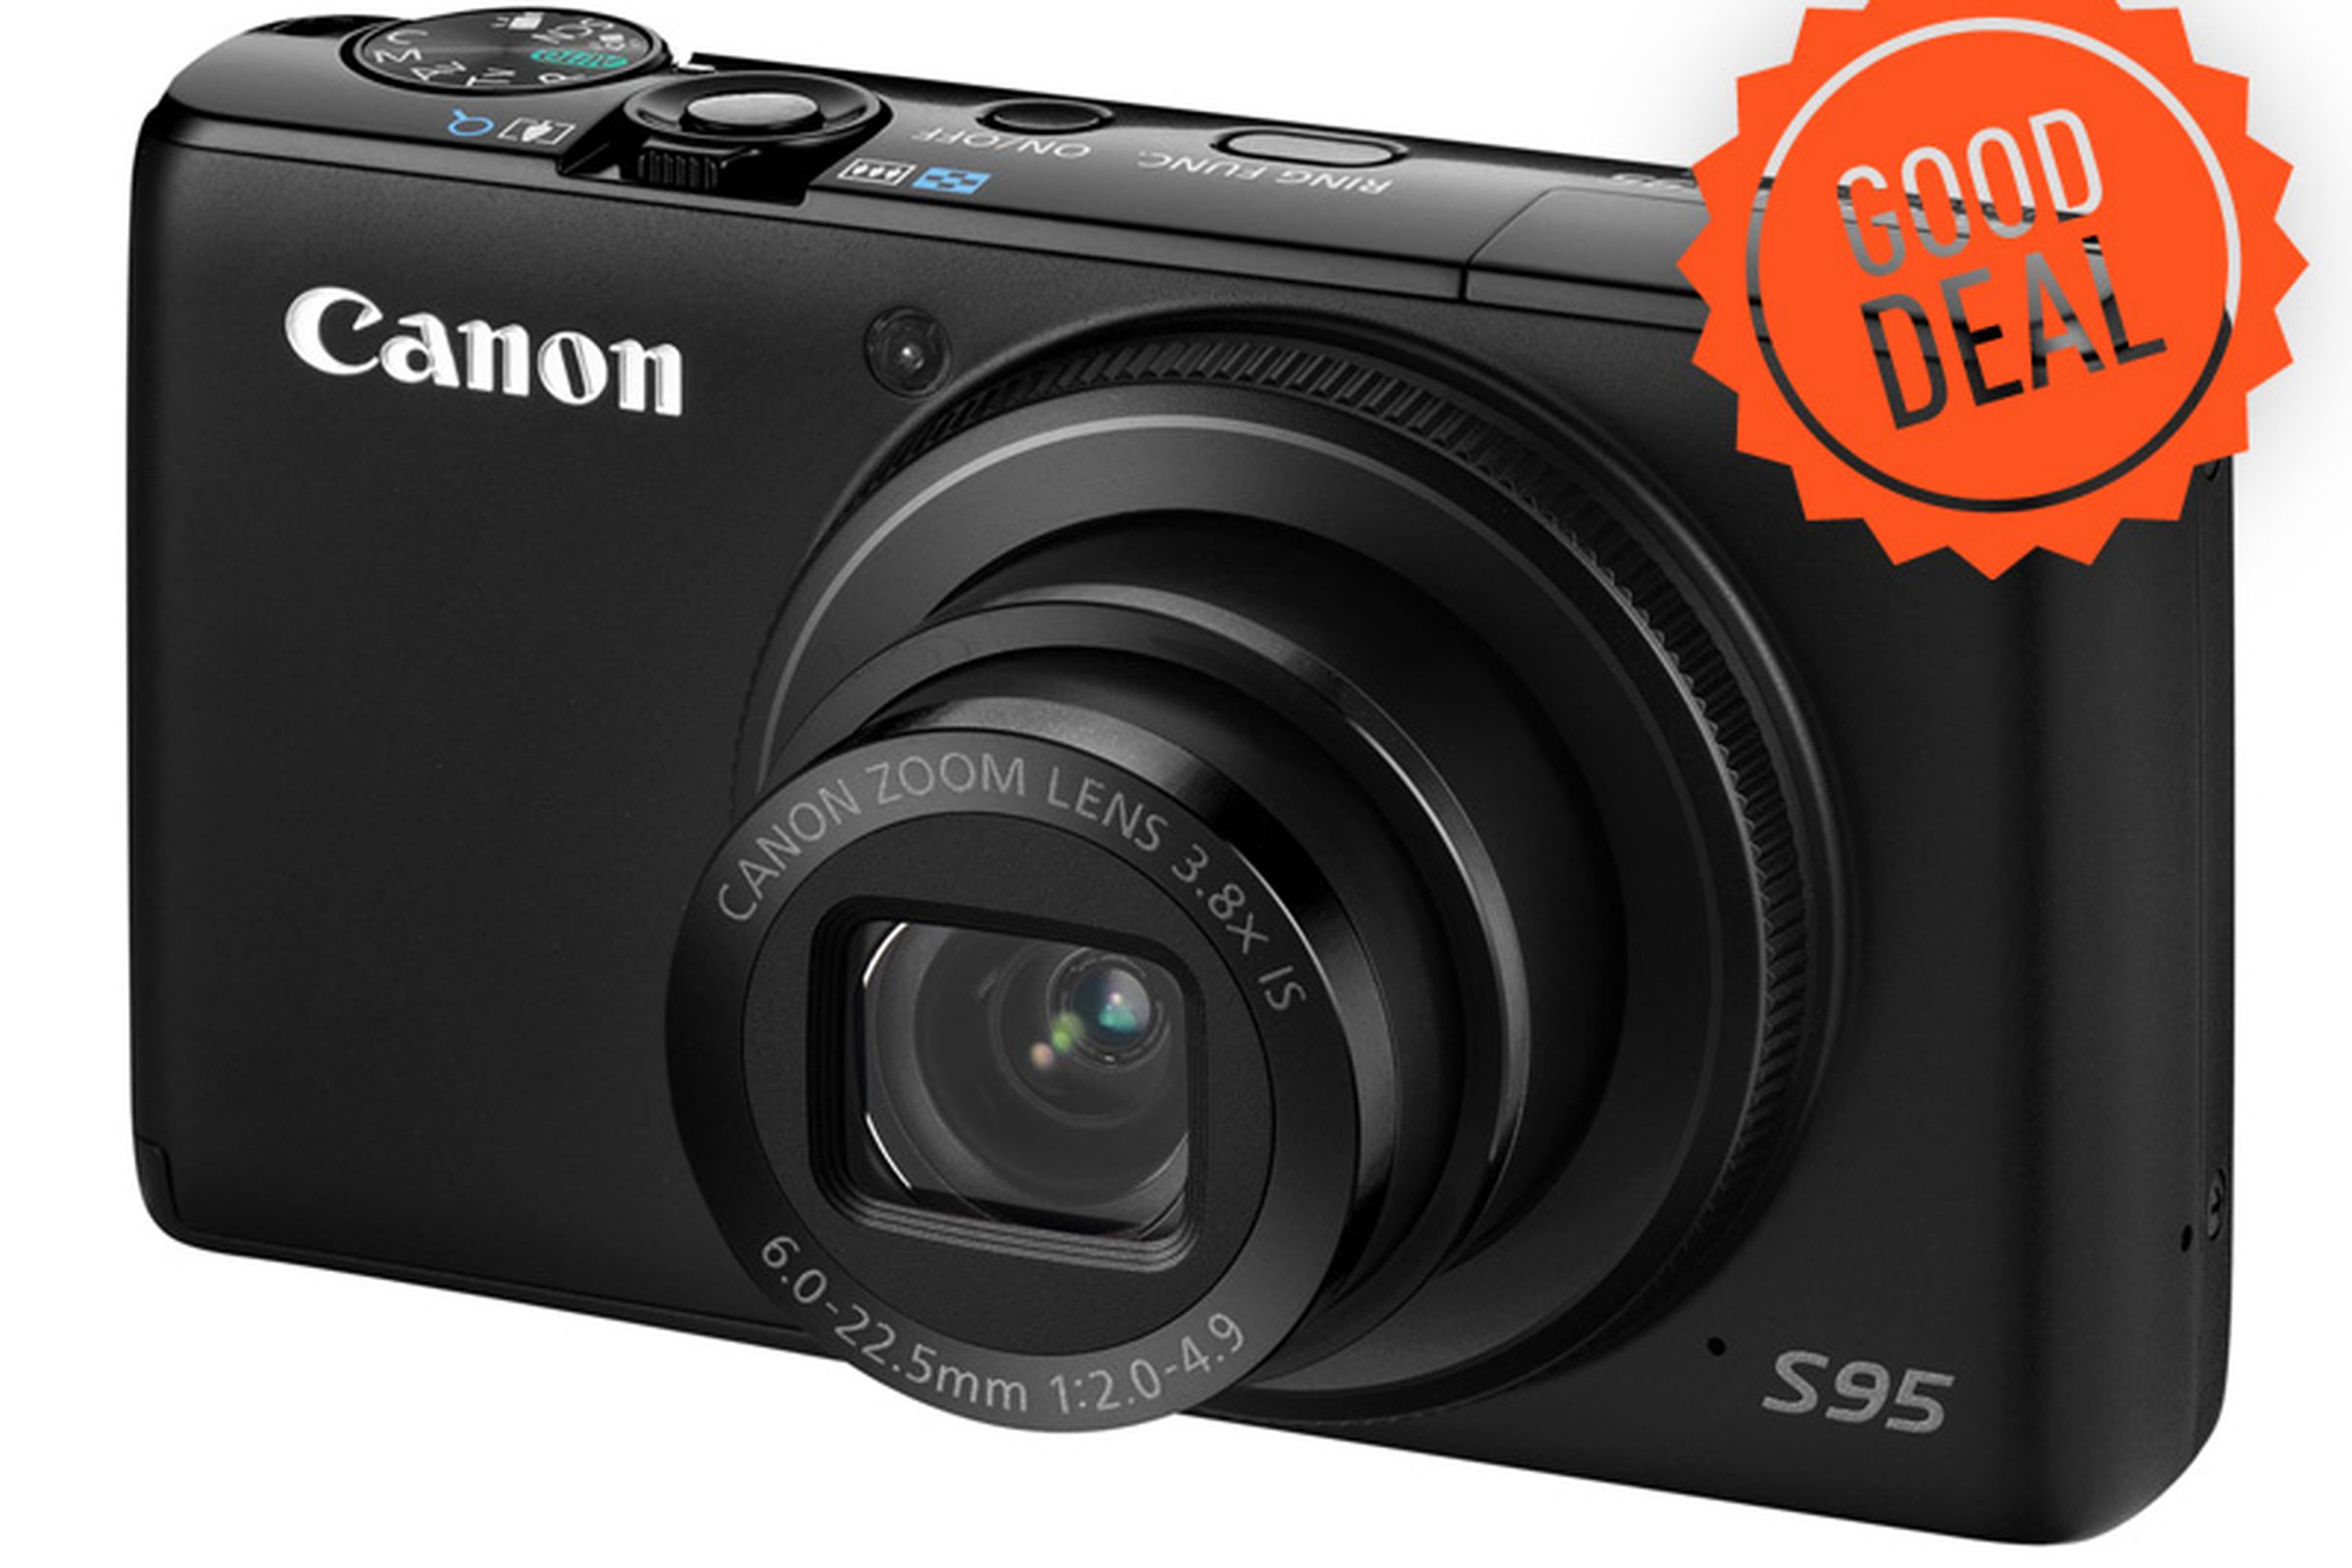 Canon PowerShot S95 Good Deal